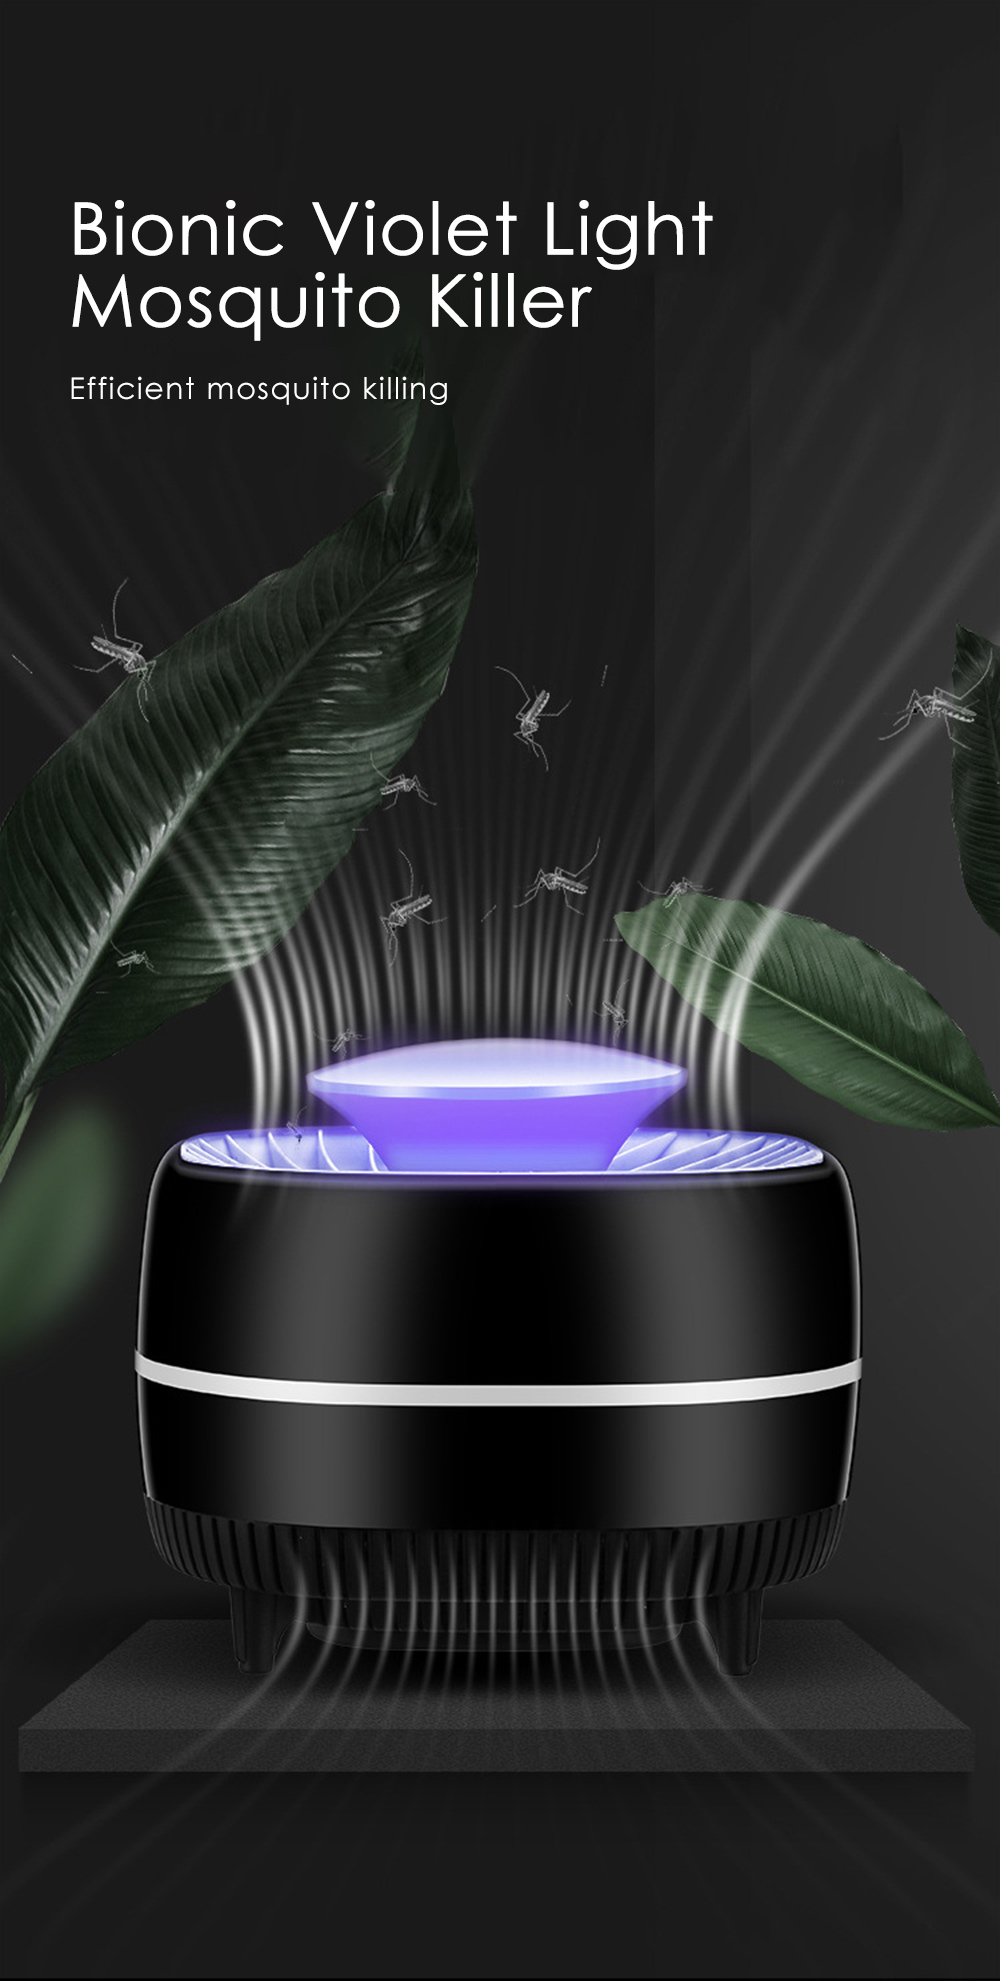 USB Powered Safe Bionic Violet Light Mosquito Killer